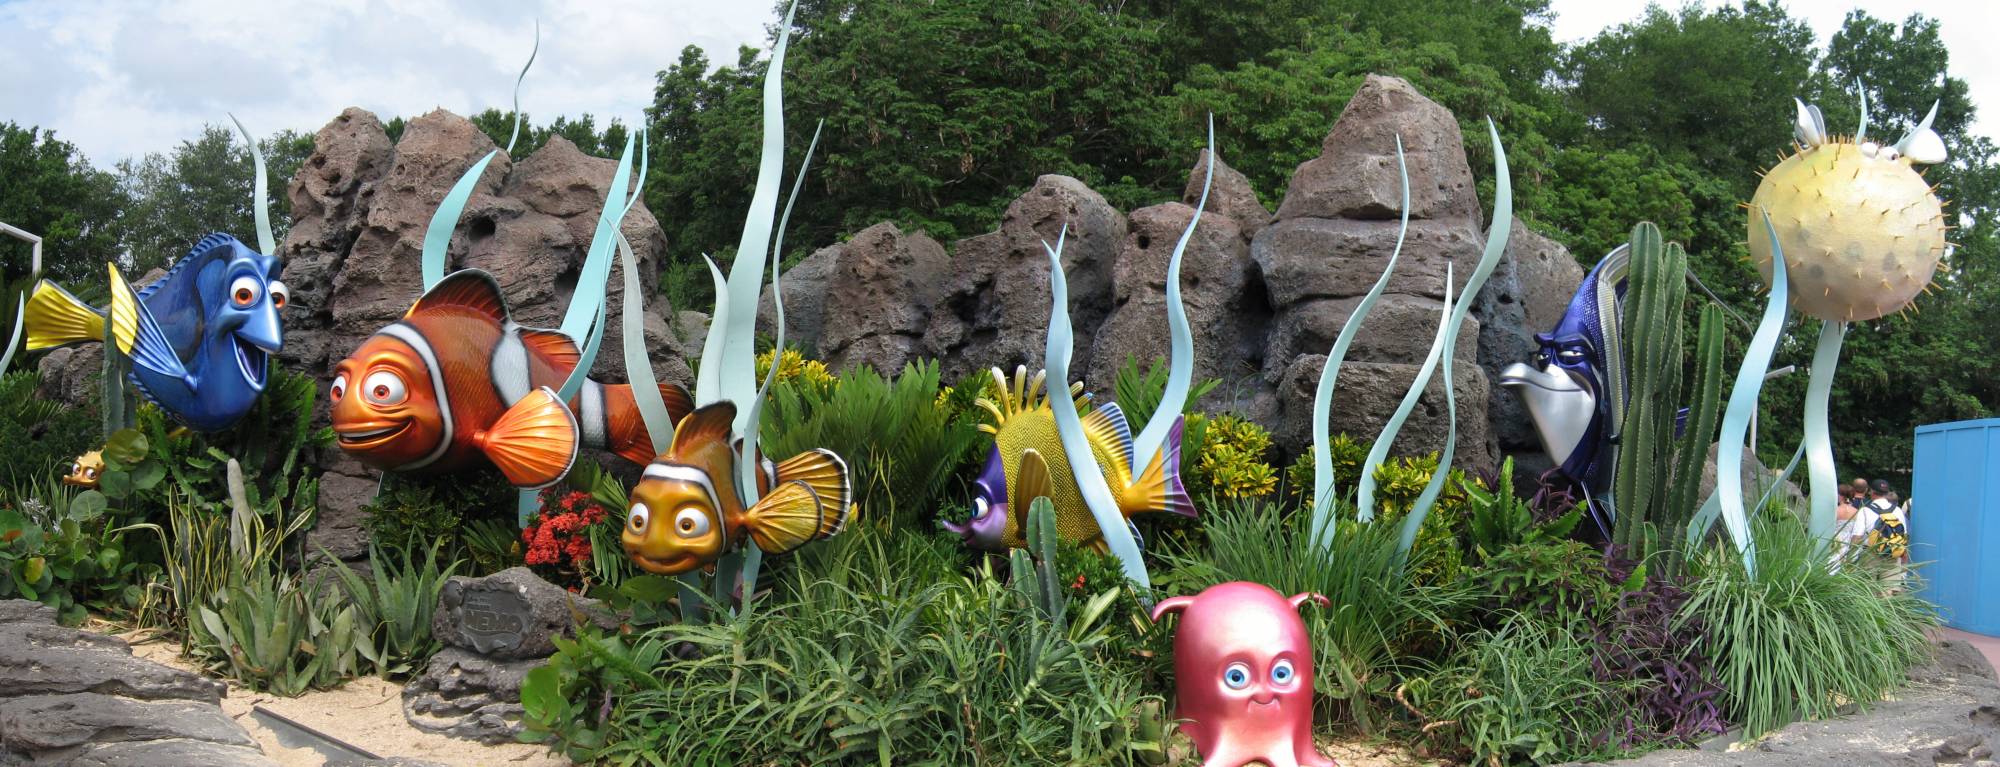 Epcot - Finding Nemo display